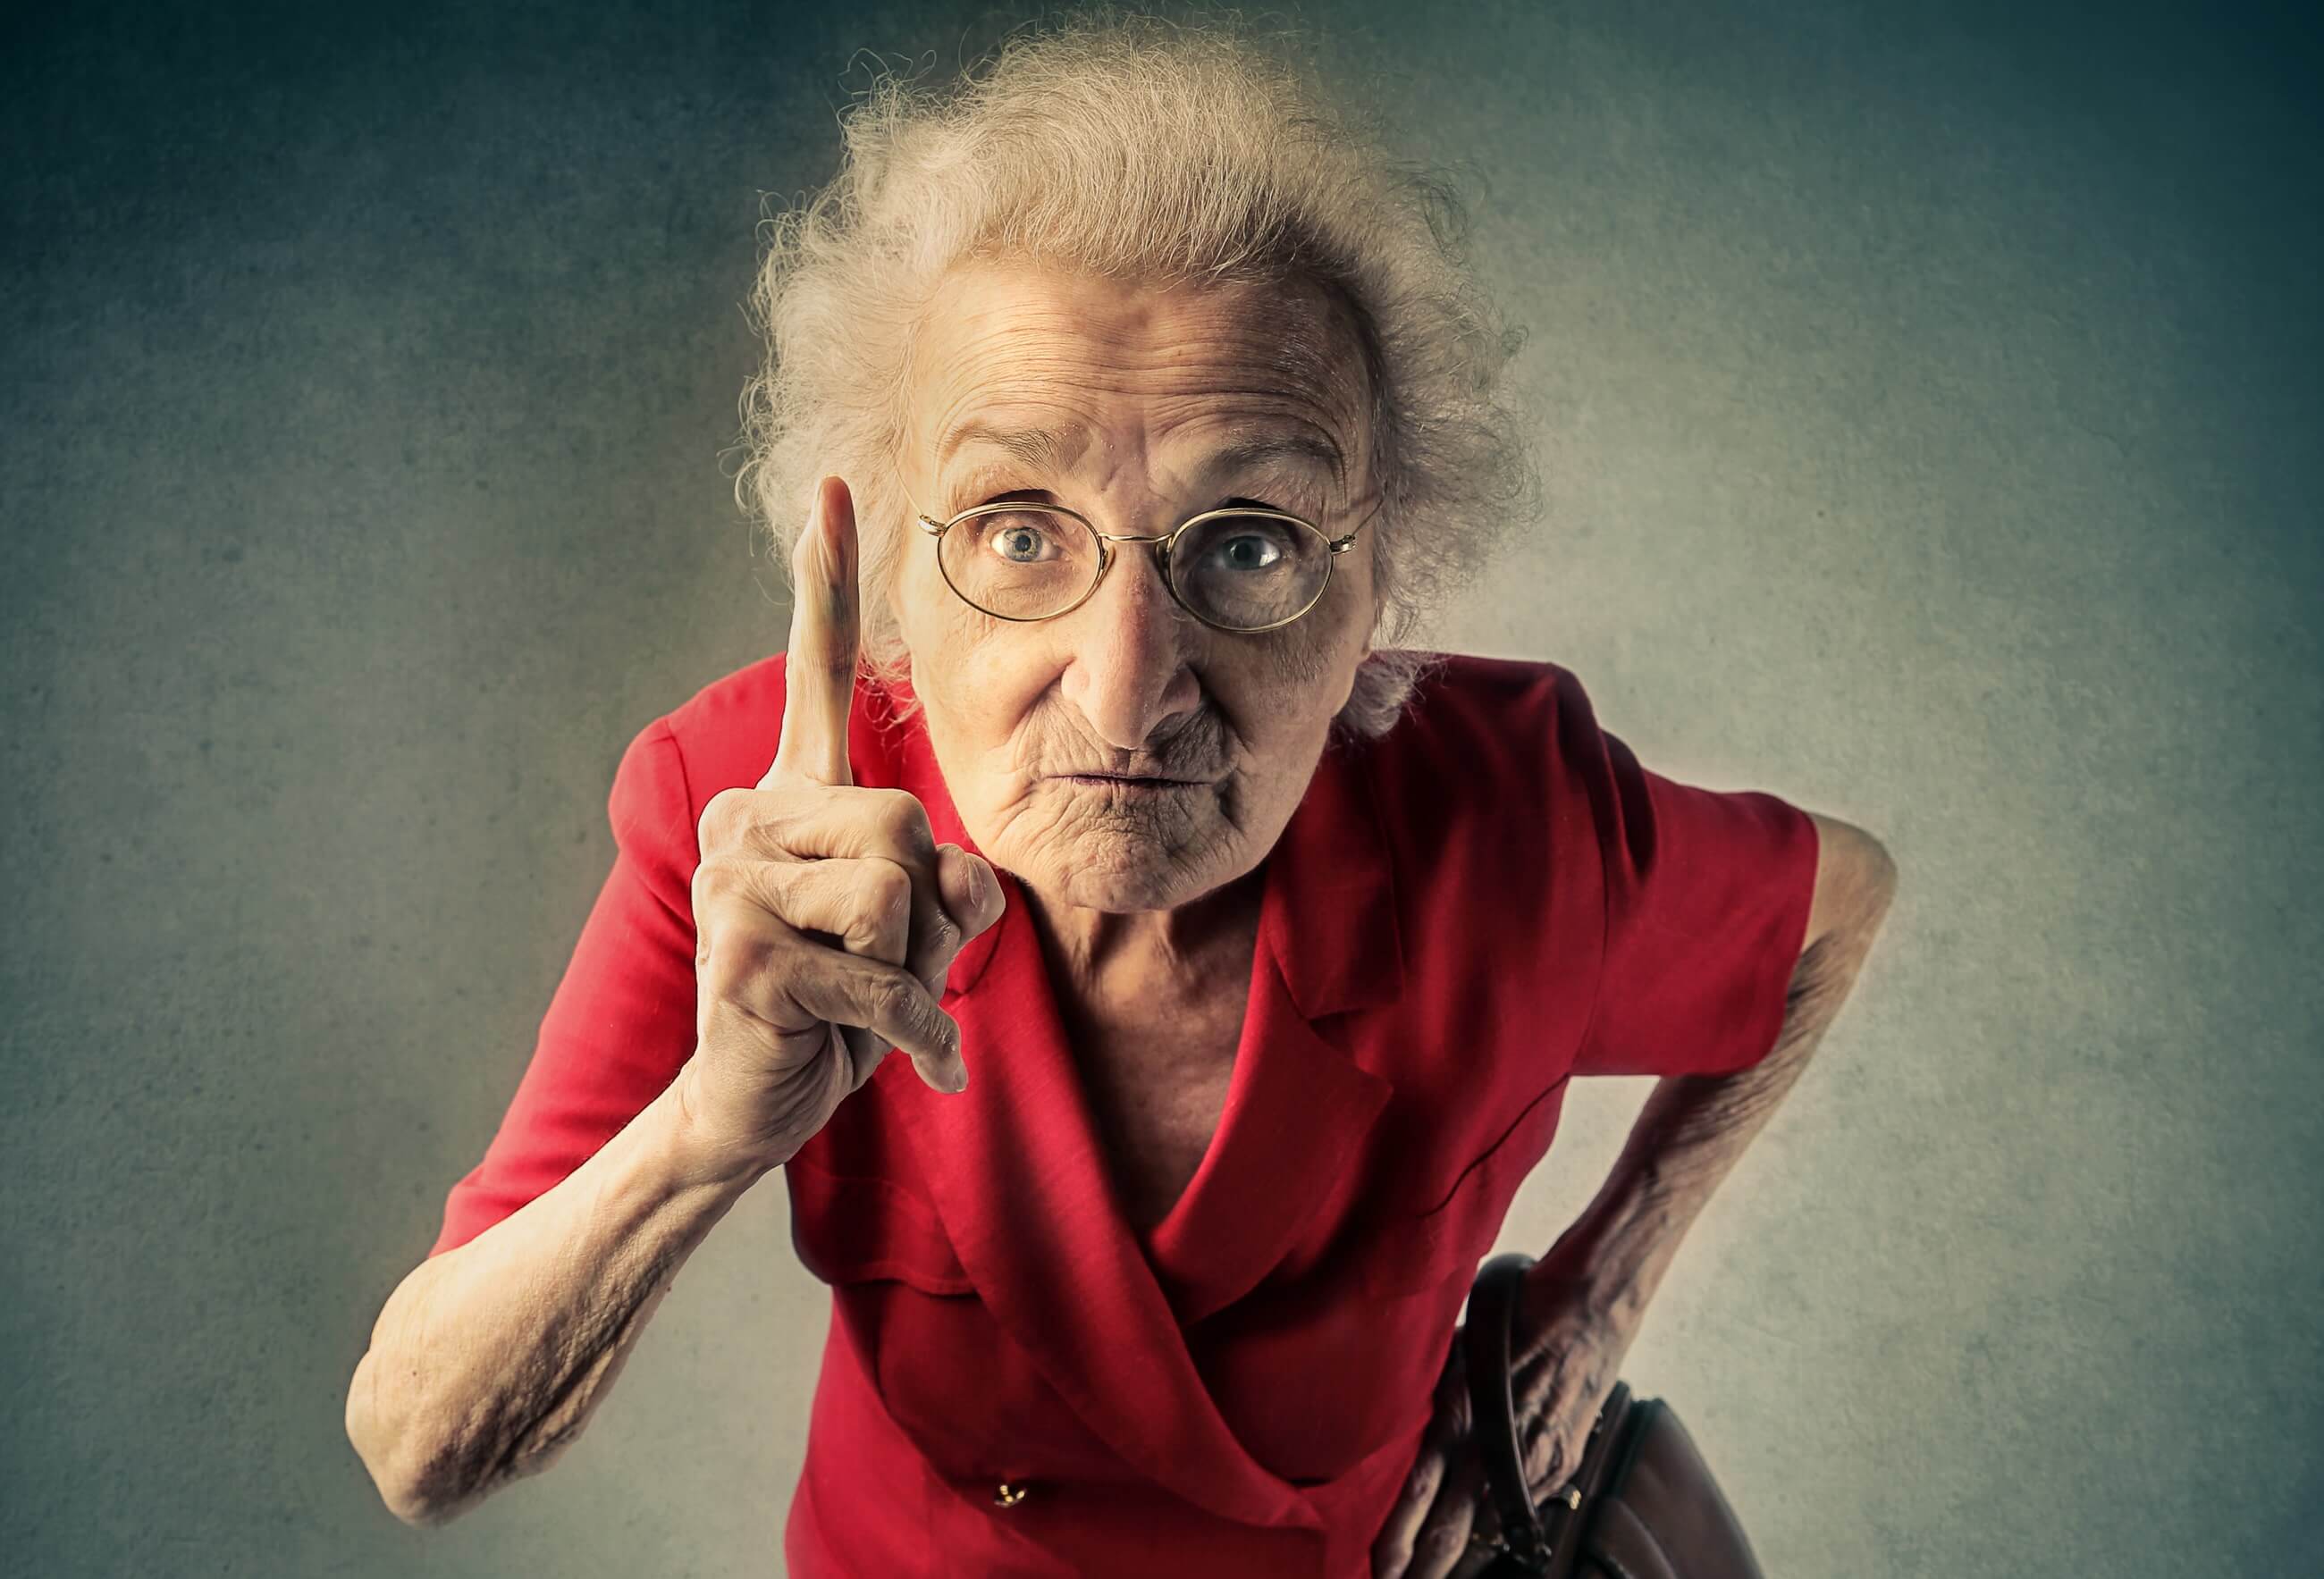 Elderly woman telling someone off